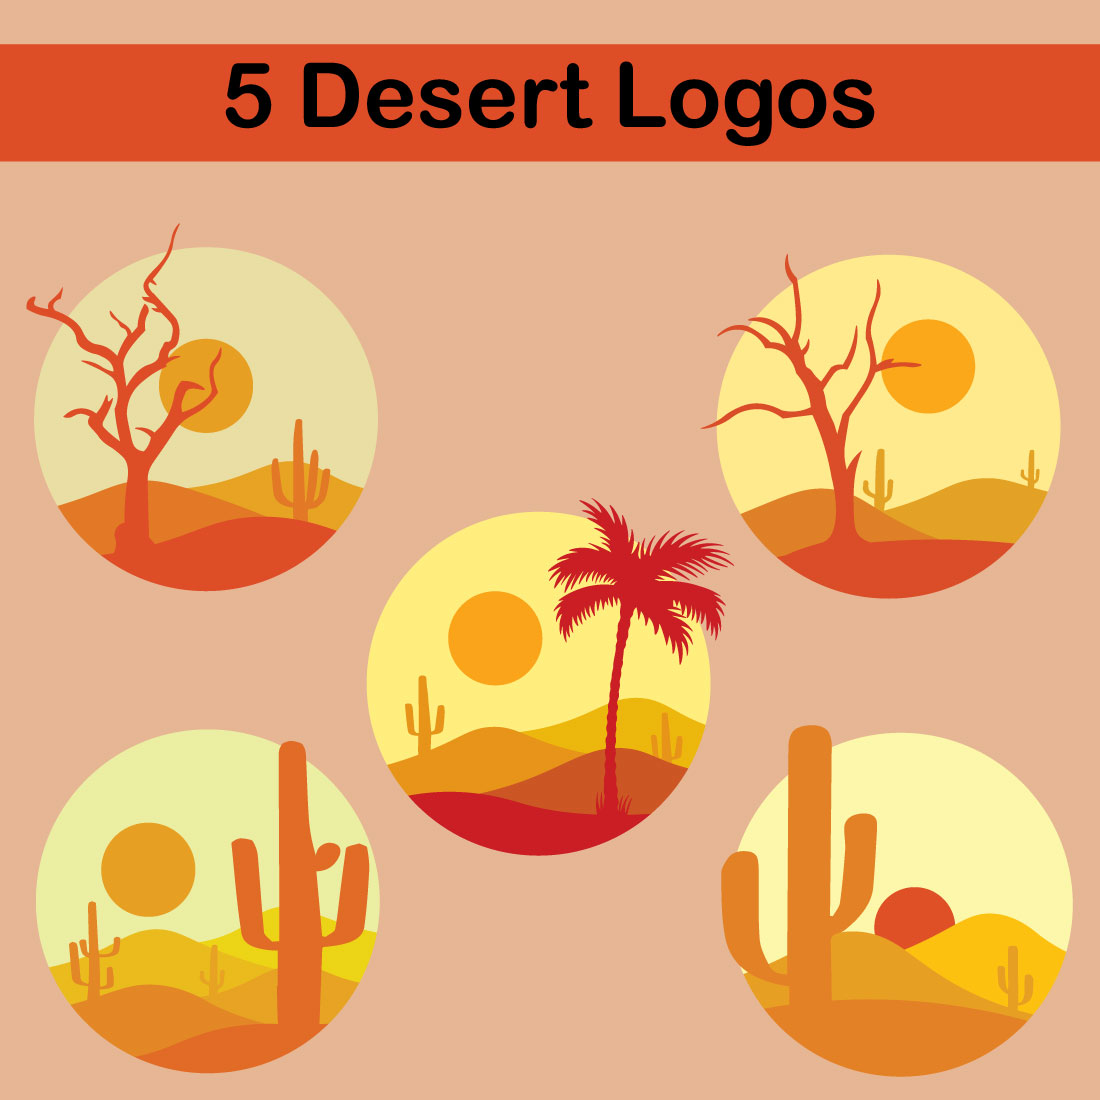 5 Desert Logos preview image.